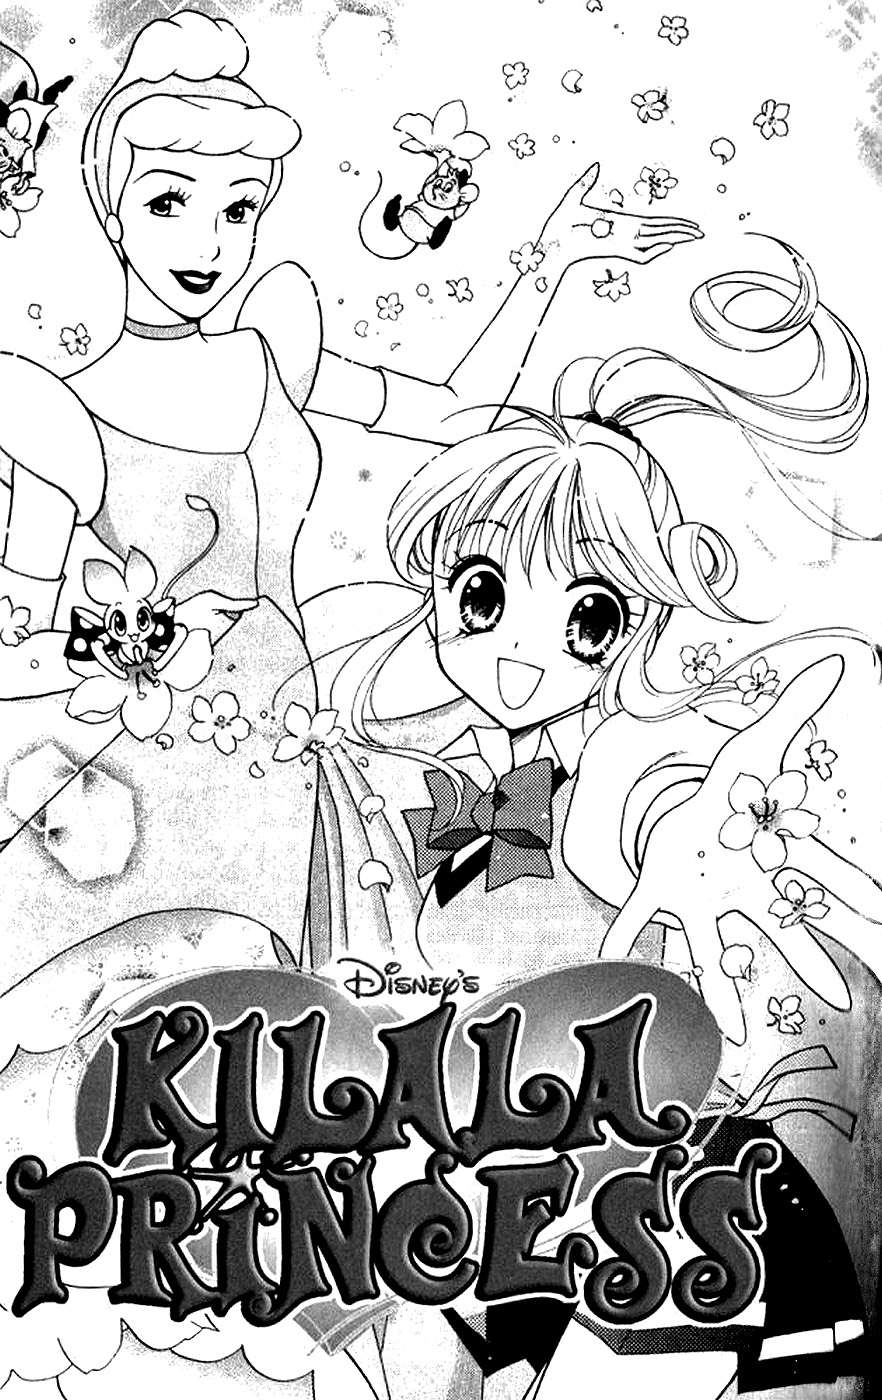 Манга всеобщая принцесса. Принцесса Килала. Kilala Princess. Kilala Princess Manga. Kilala Princess Chapter 1.